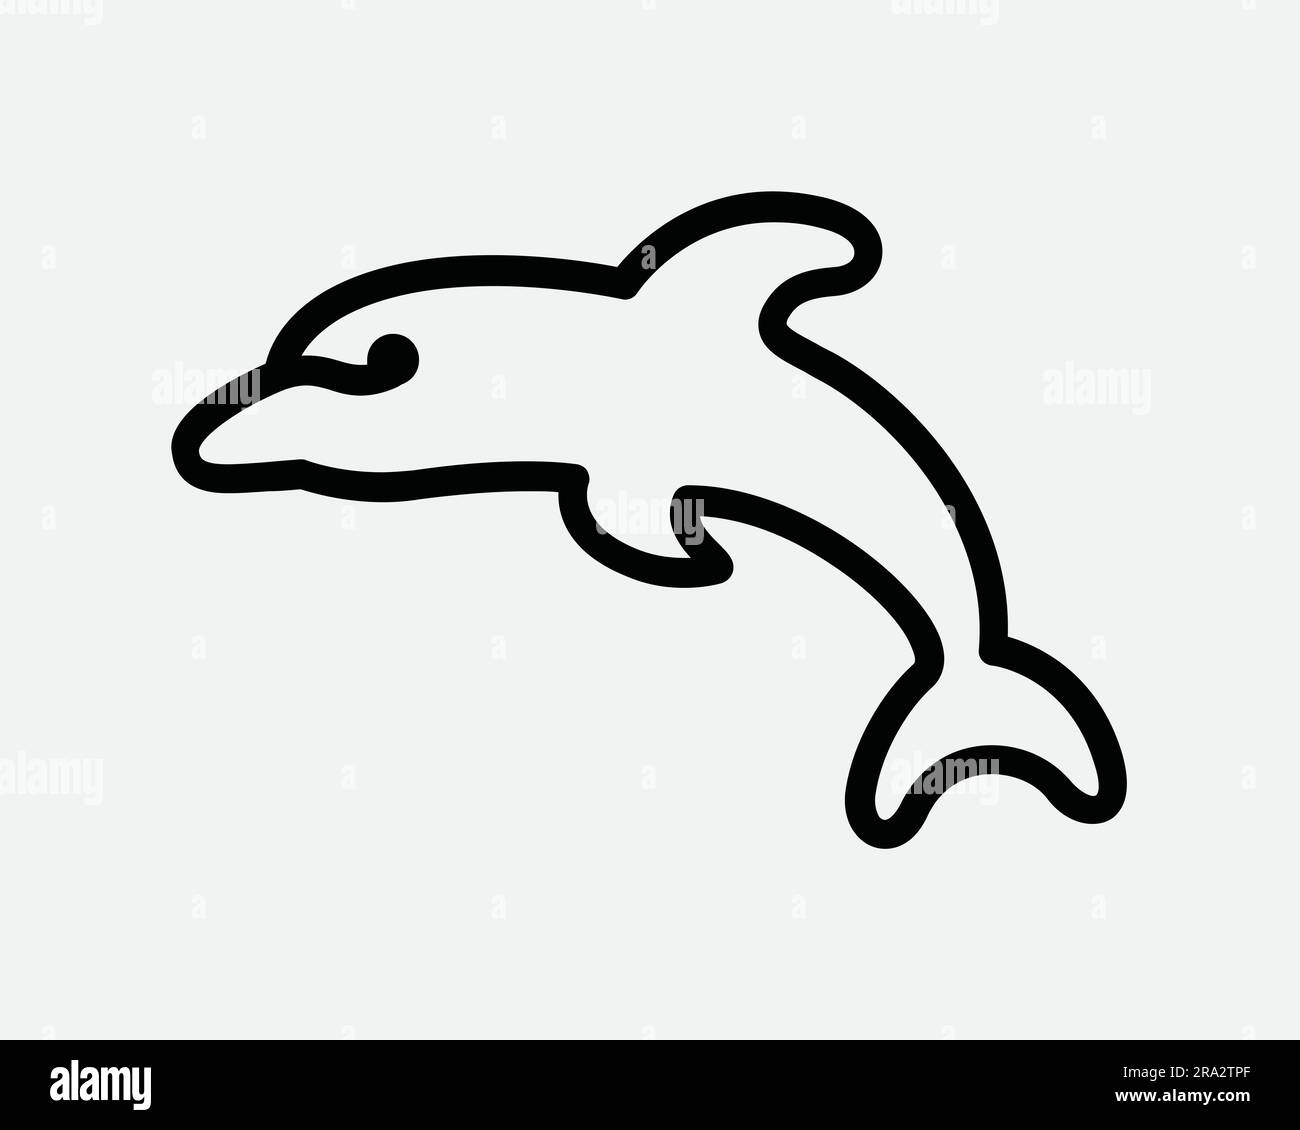 Dolphin Line Icon Animal Whale Outline Mammal Fish Jump Marine Aquatic Wildlife Swim Water Black White Graphic Clipart Illustration symbole signe Vector EPS Illustration de Vecteur